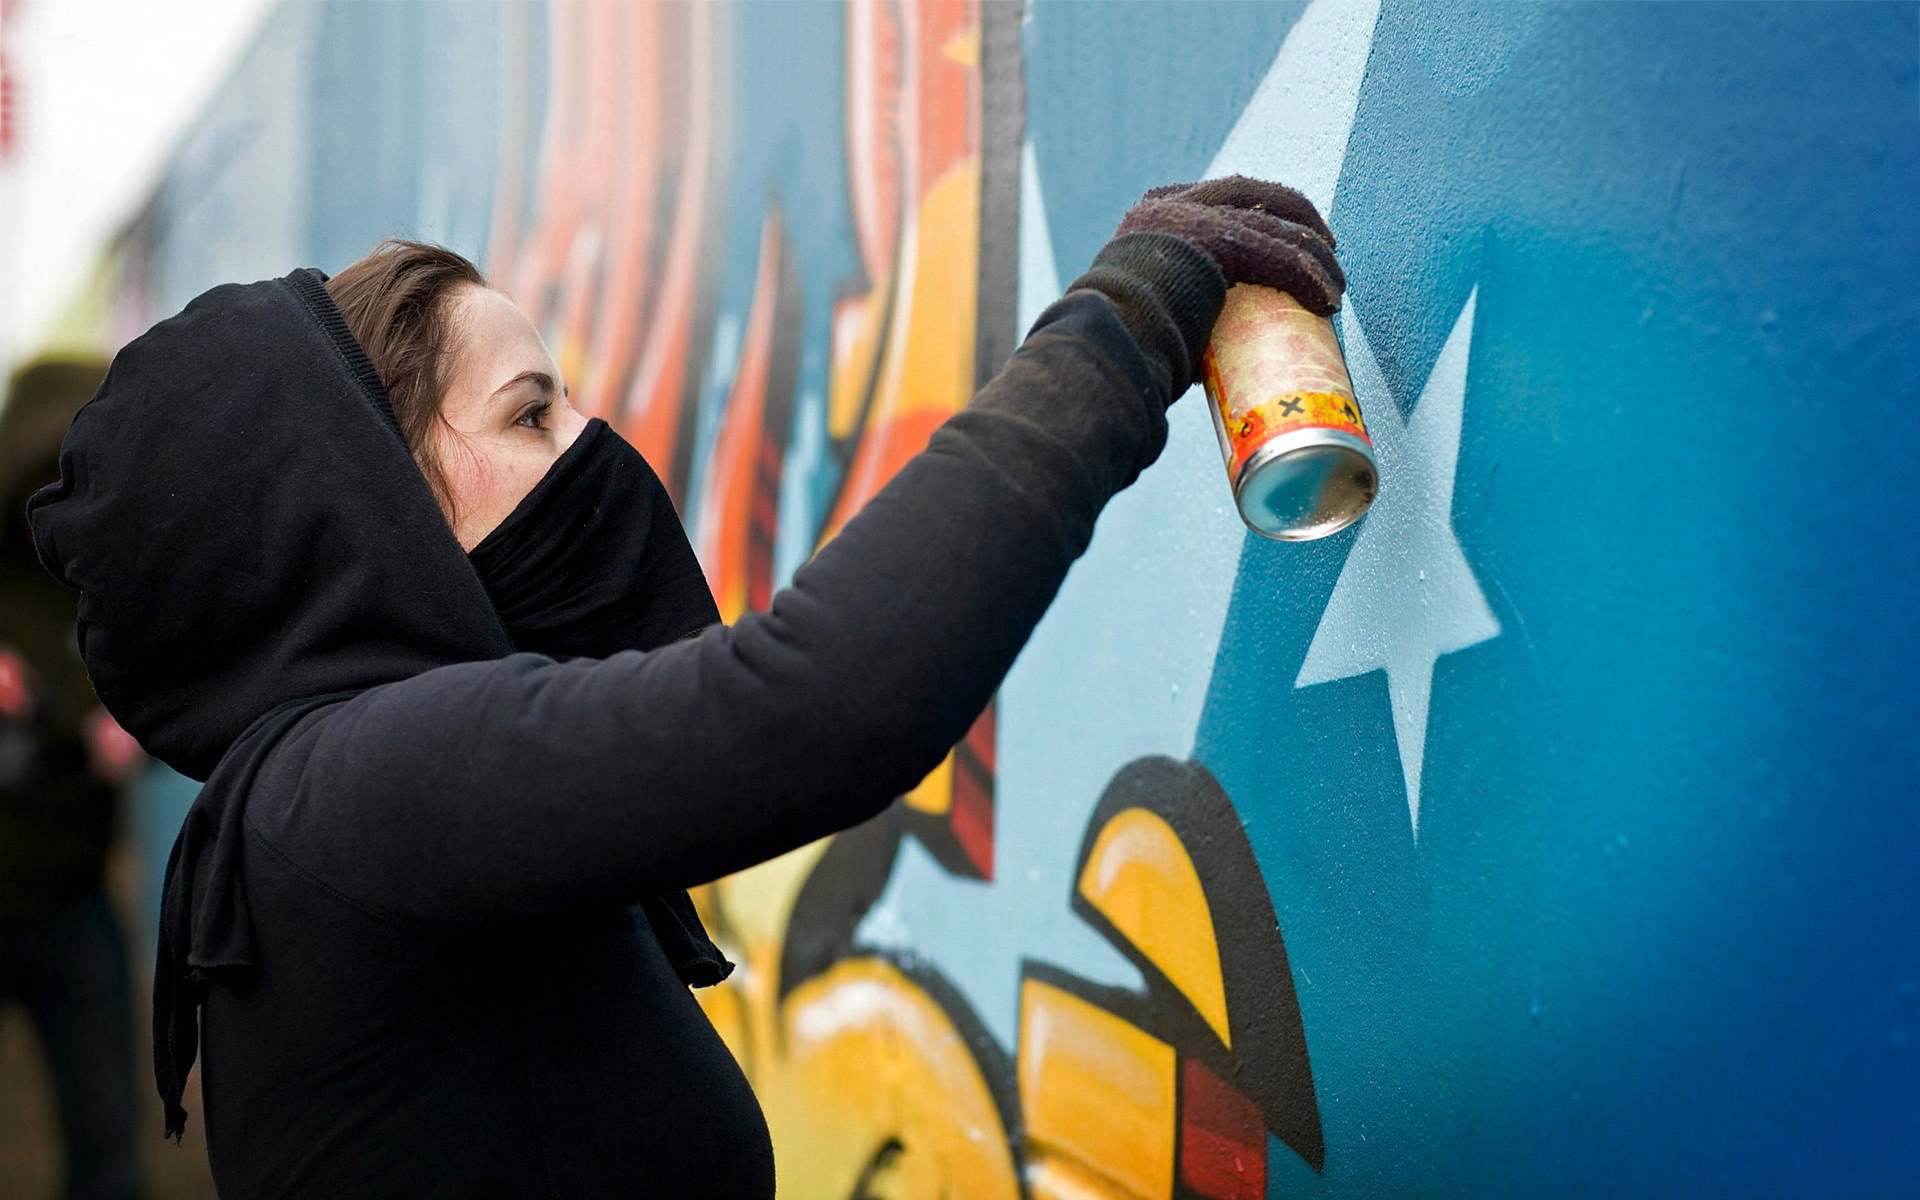 Graffiti sprayer